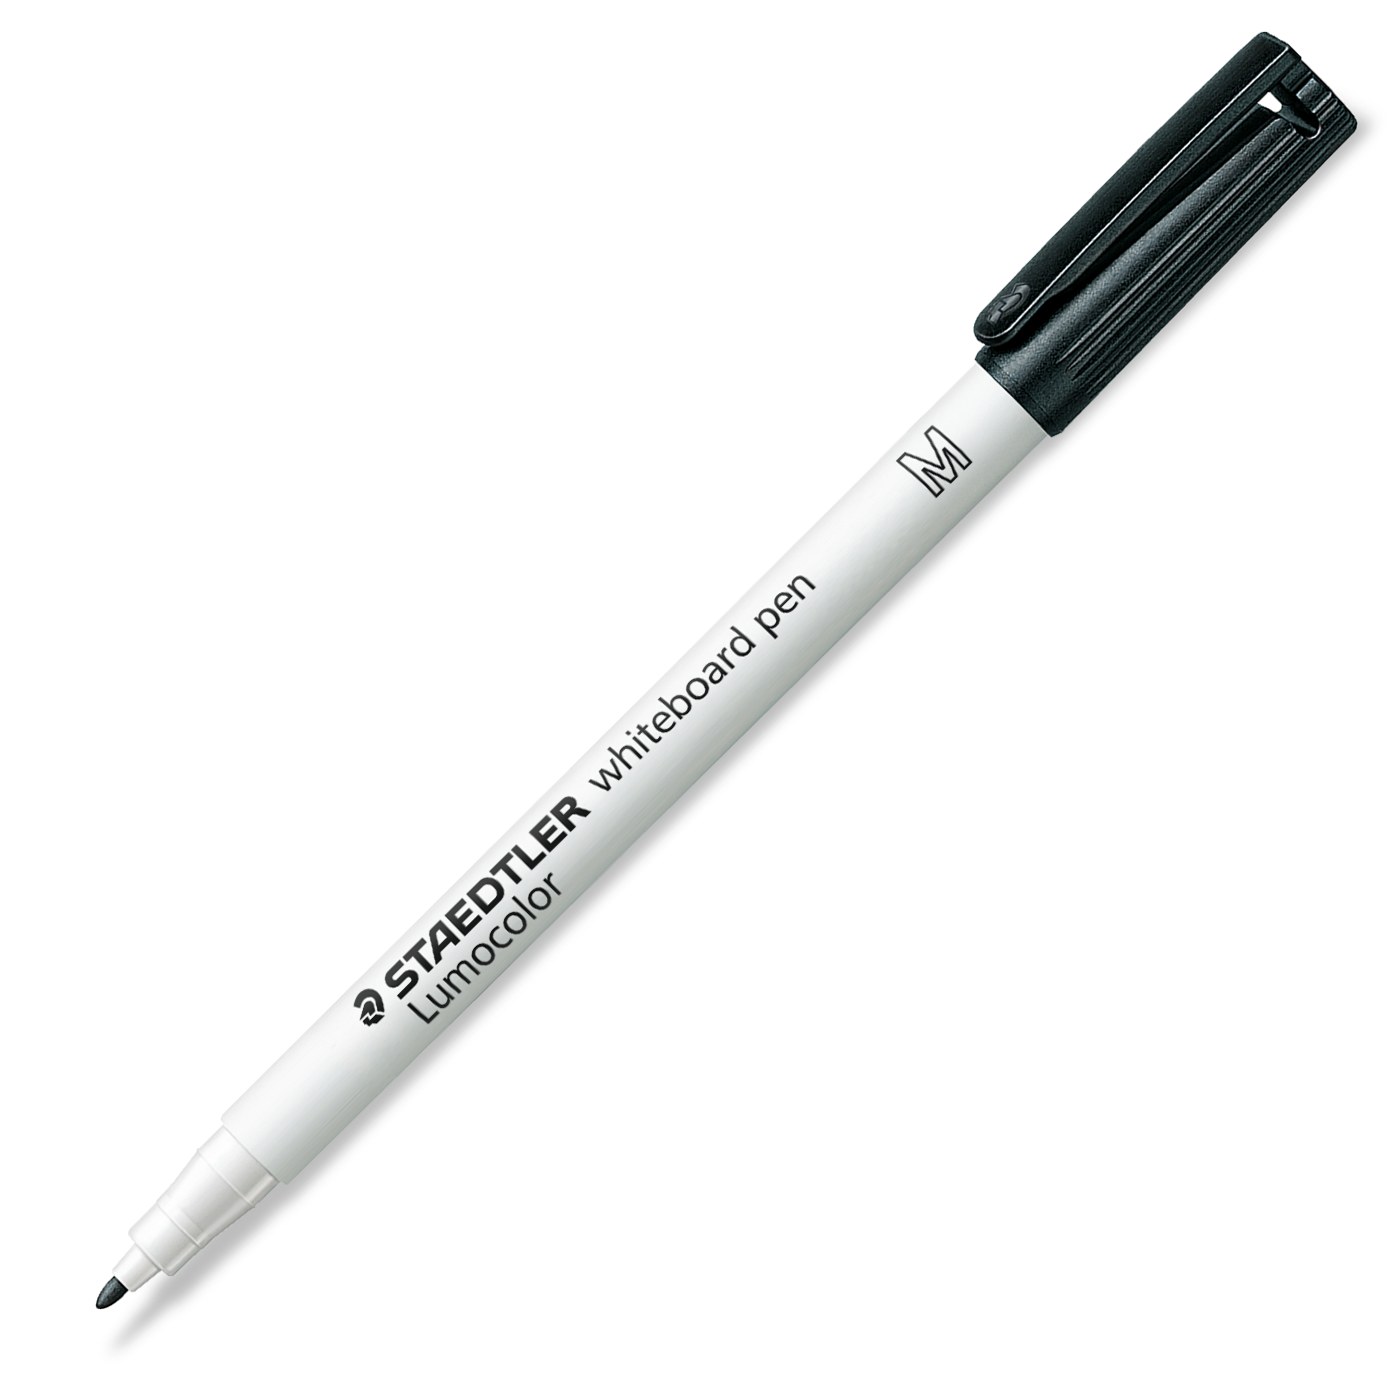 Staedtler Whiteboard Pen Lumocolor 301 Medium Tip 1mm Black